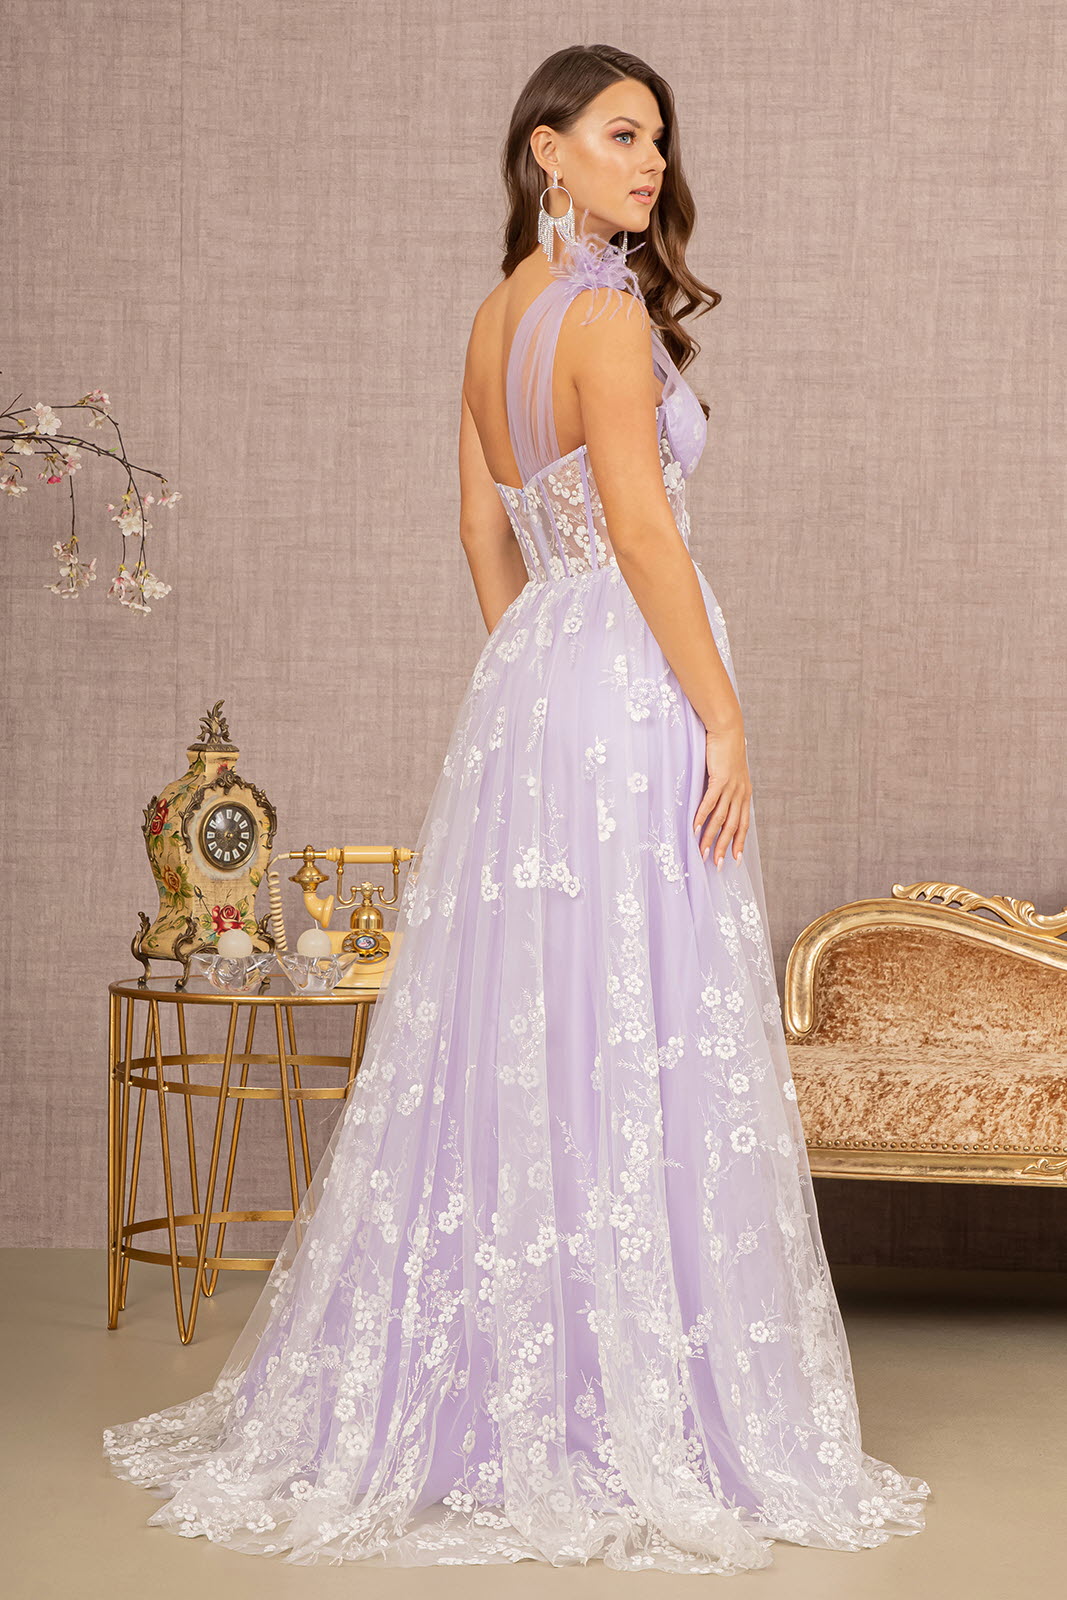 Asymmetric A-line Dress w/ Feather Sheer Bodice & Flower Applique-smcdress